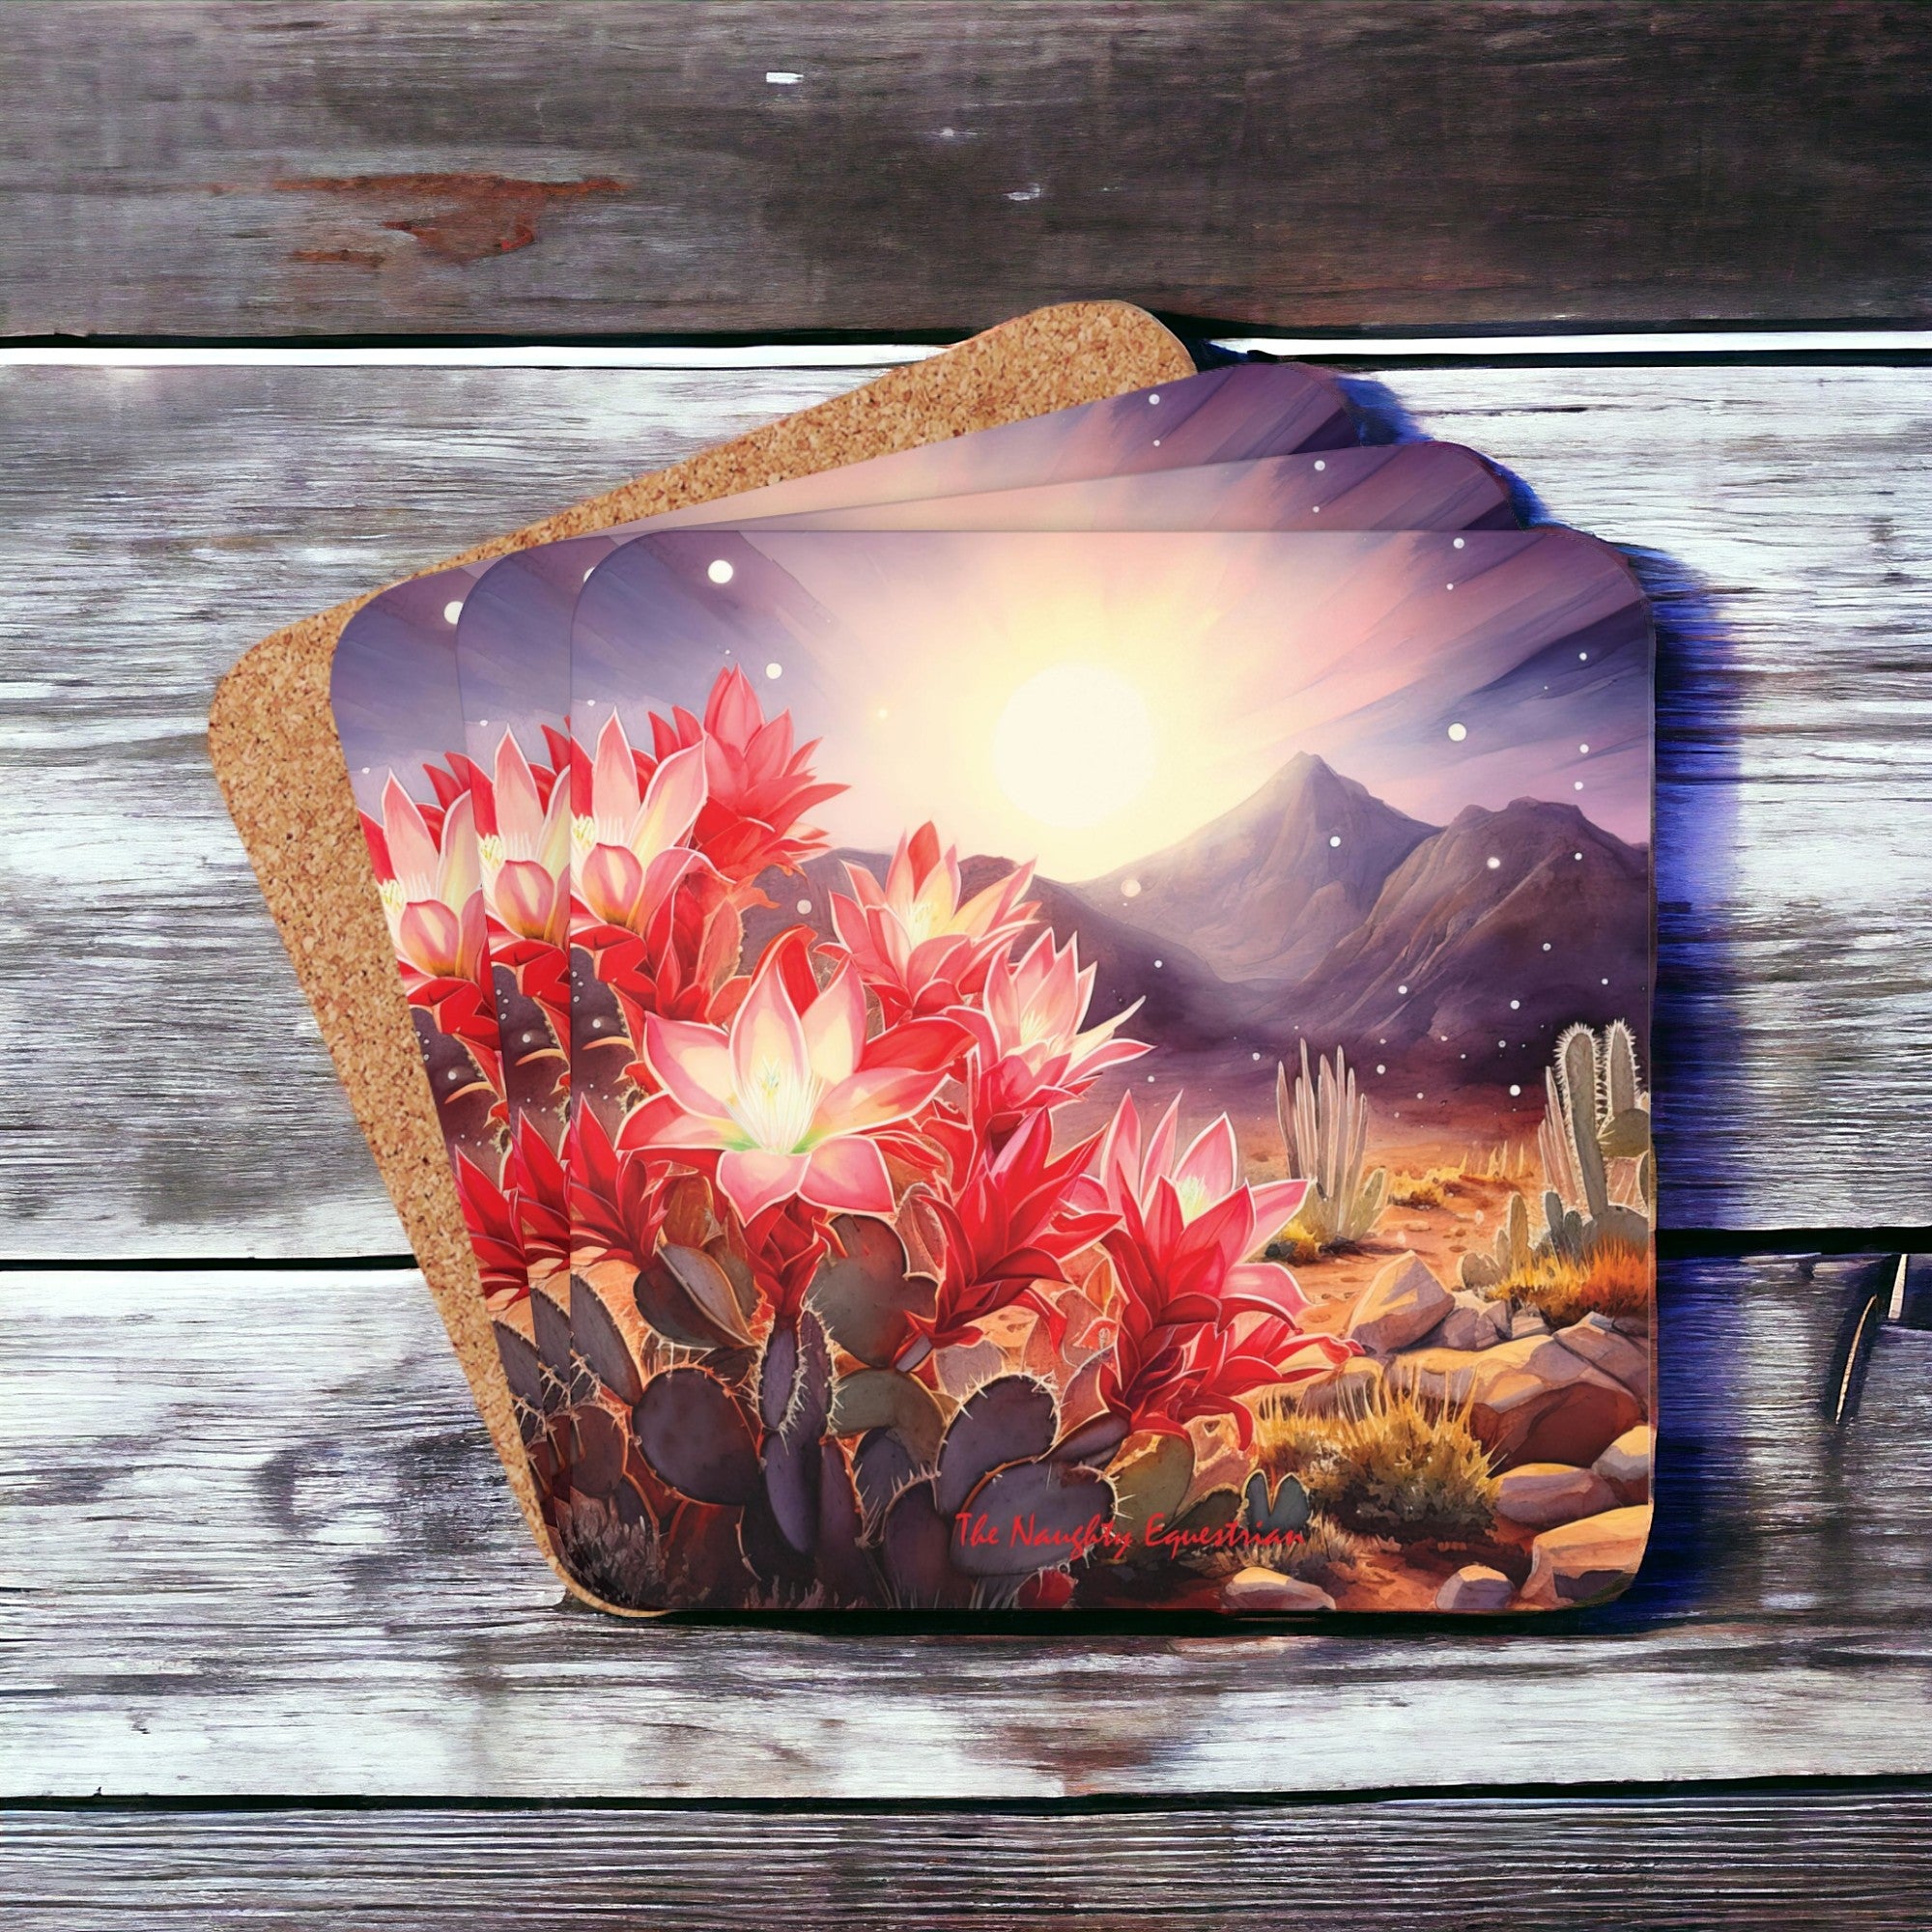 Scarlet Oasis: Red Flowering Cactus Sunrise Coaster Set